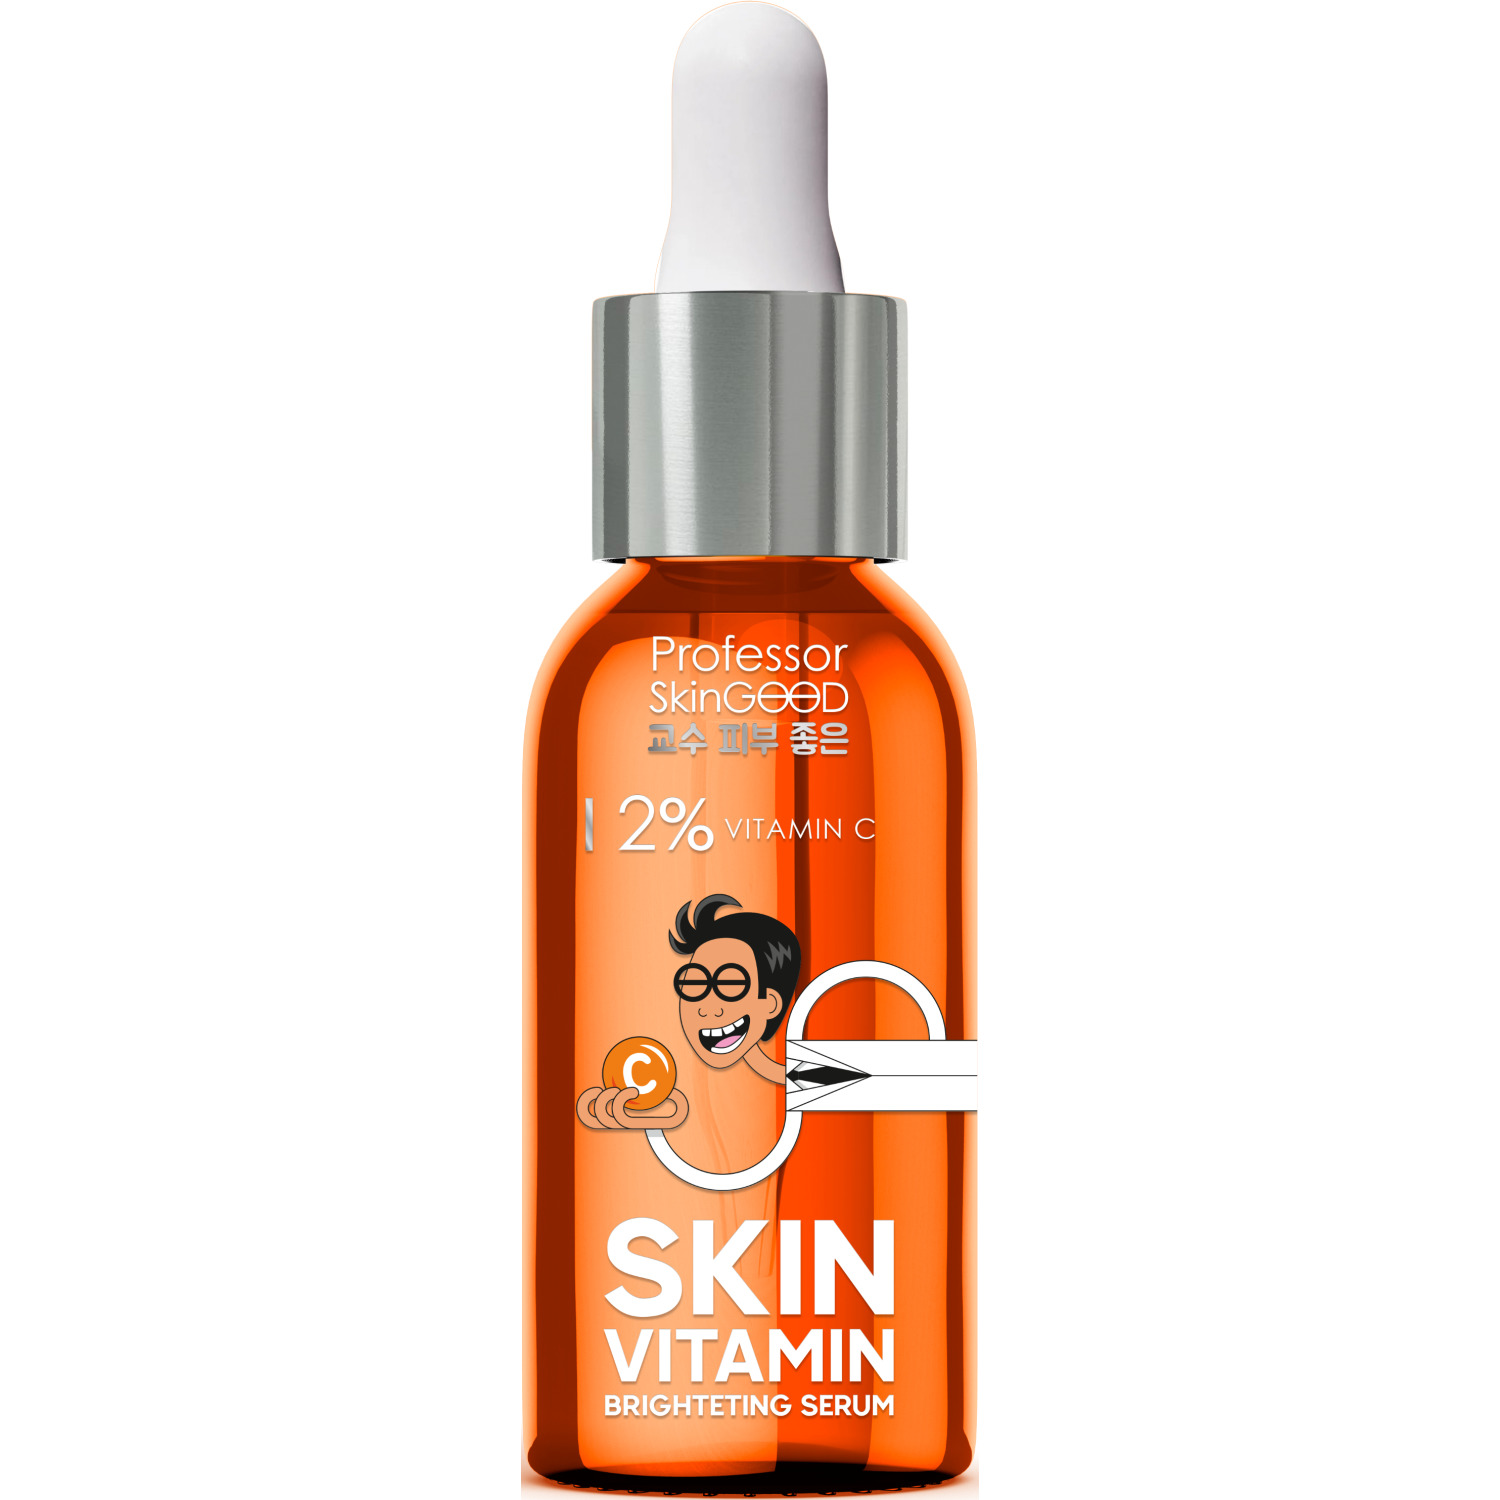 Professor SkinGOOD Сыворотка с витамином С Skin Vitamin Brightening Serum, 30 мл (Professor SkinGOOD, Уход)